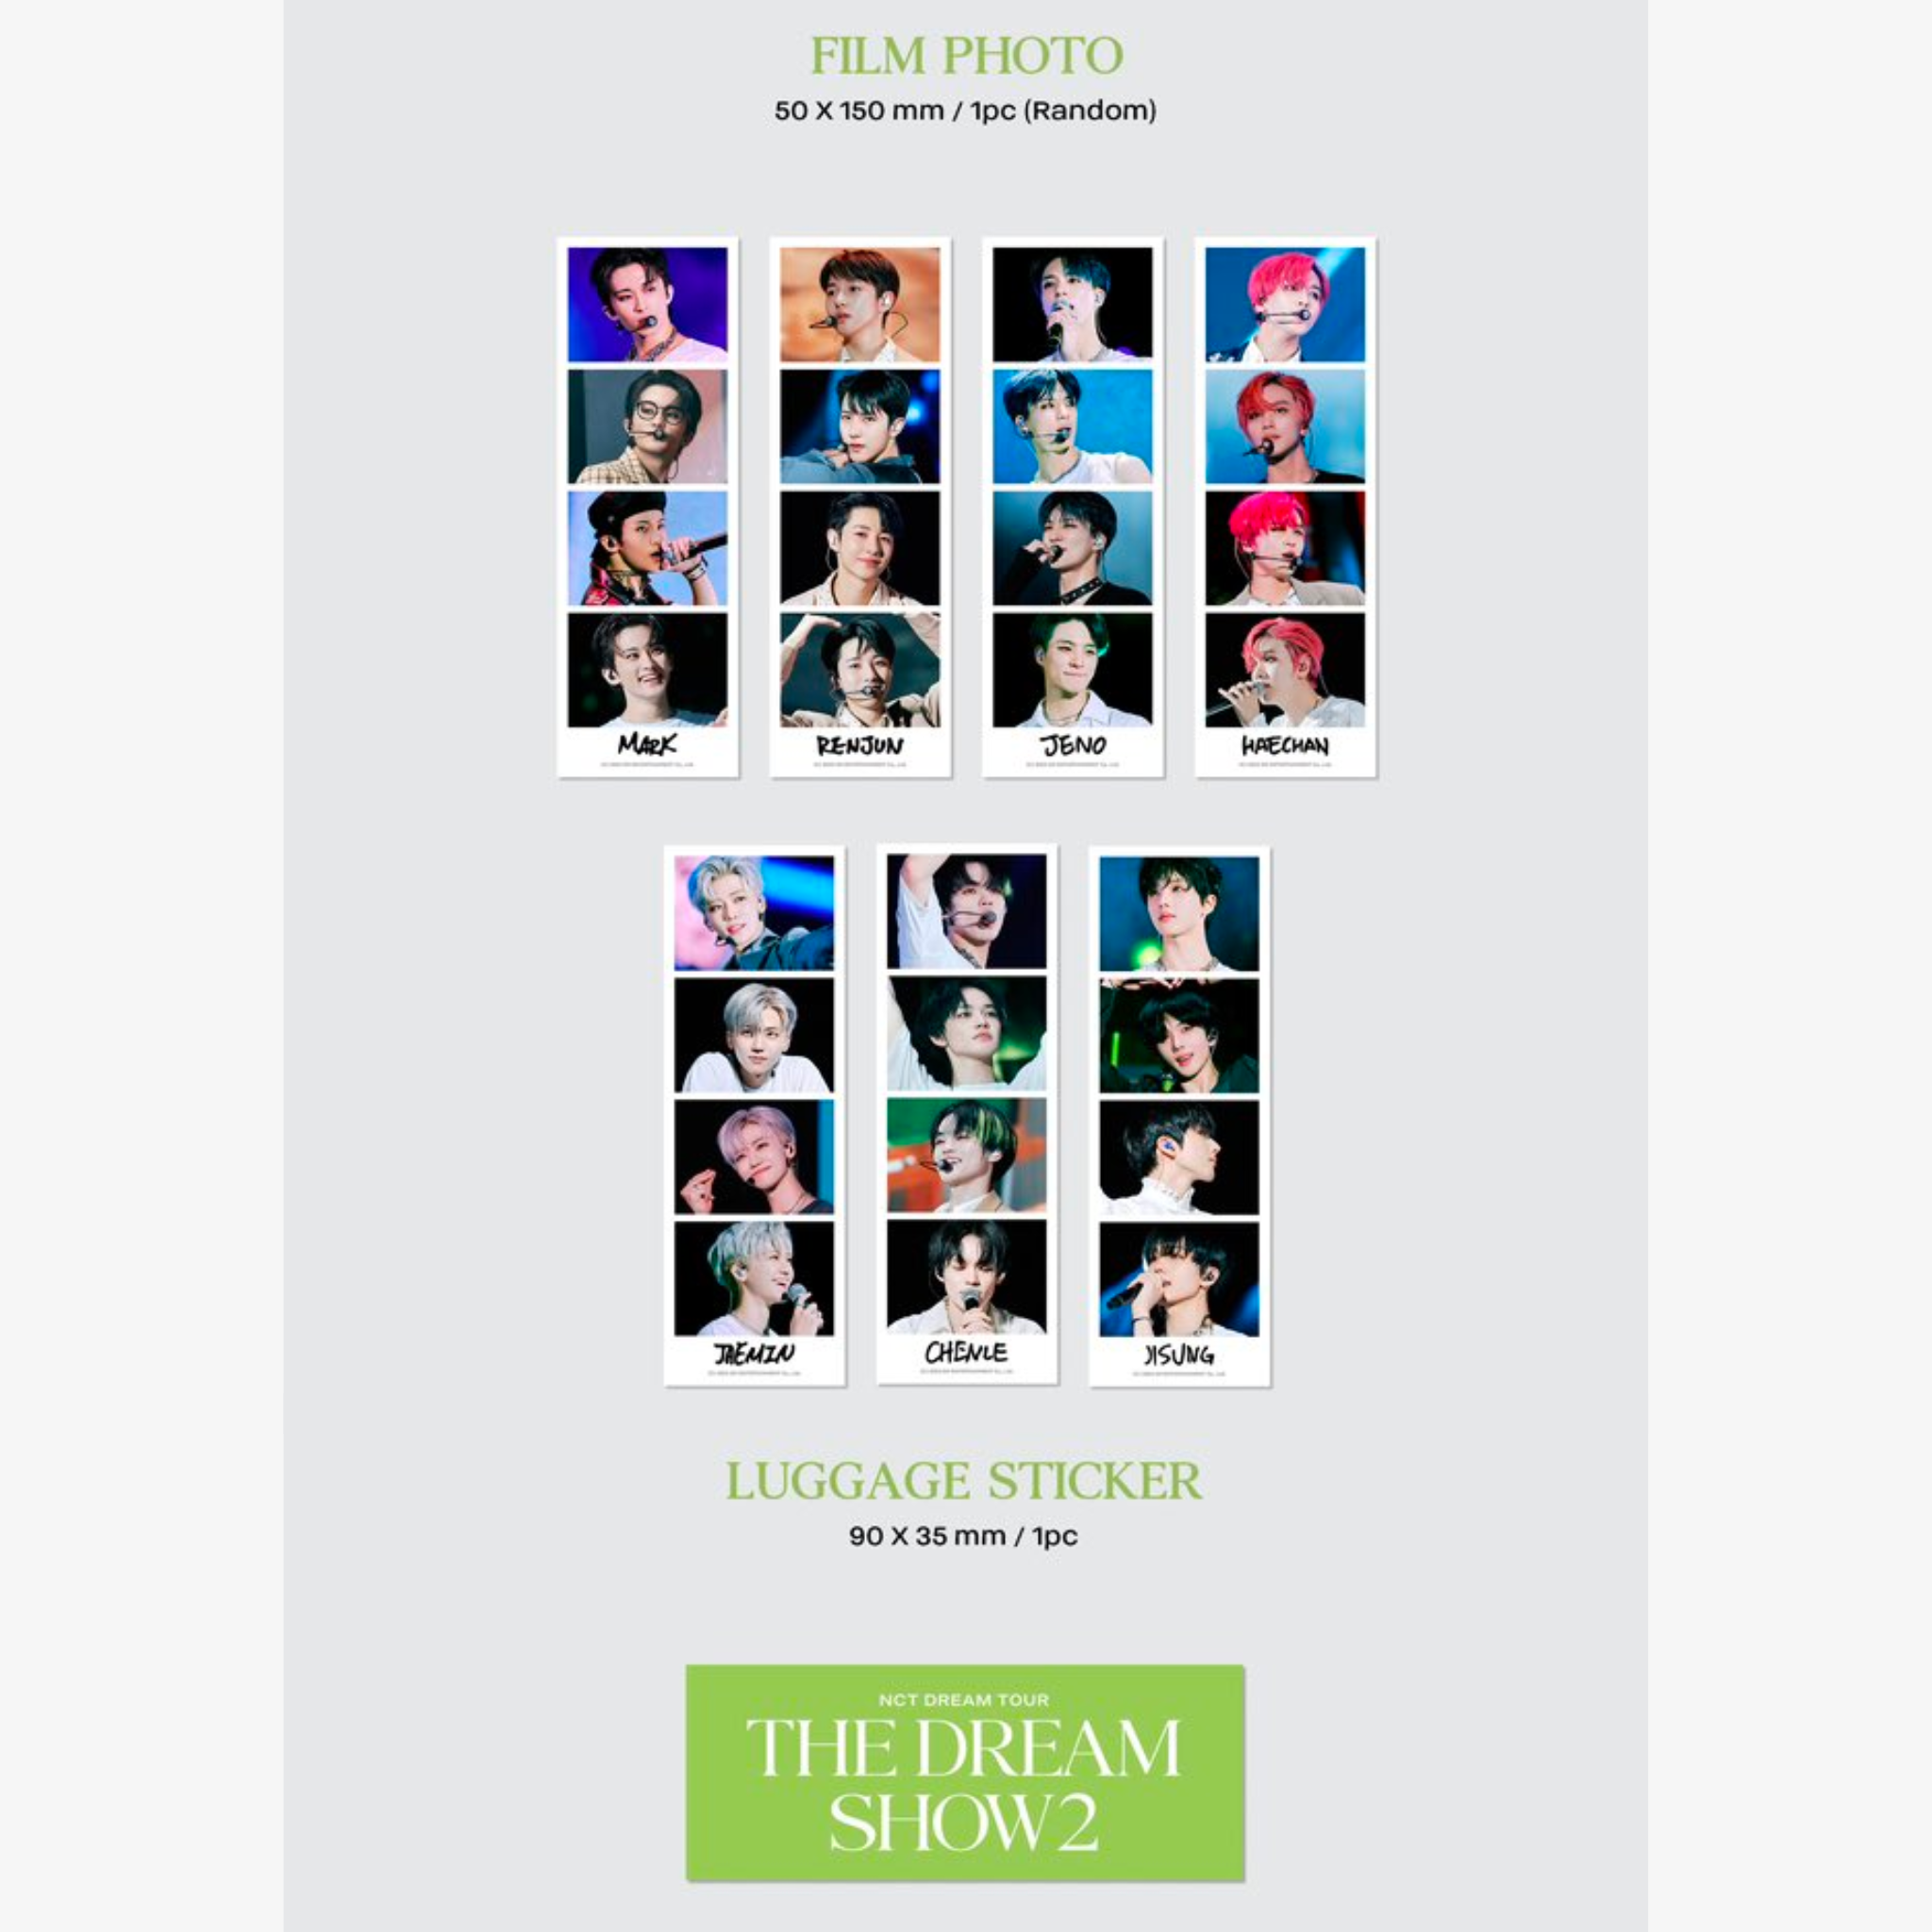 NCT DREAM TOUR 'THE DREAM SHOW2' CONCERT PHOTOBOOK